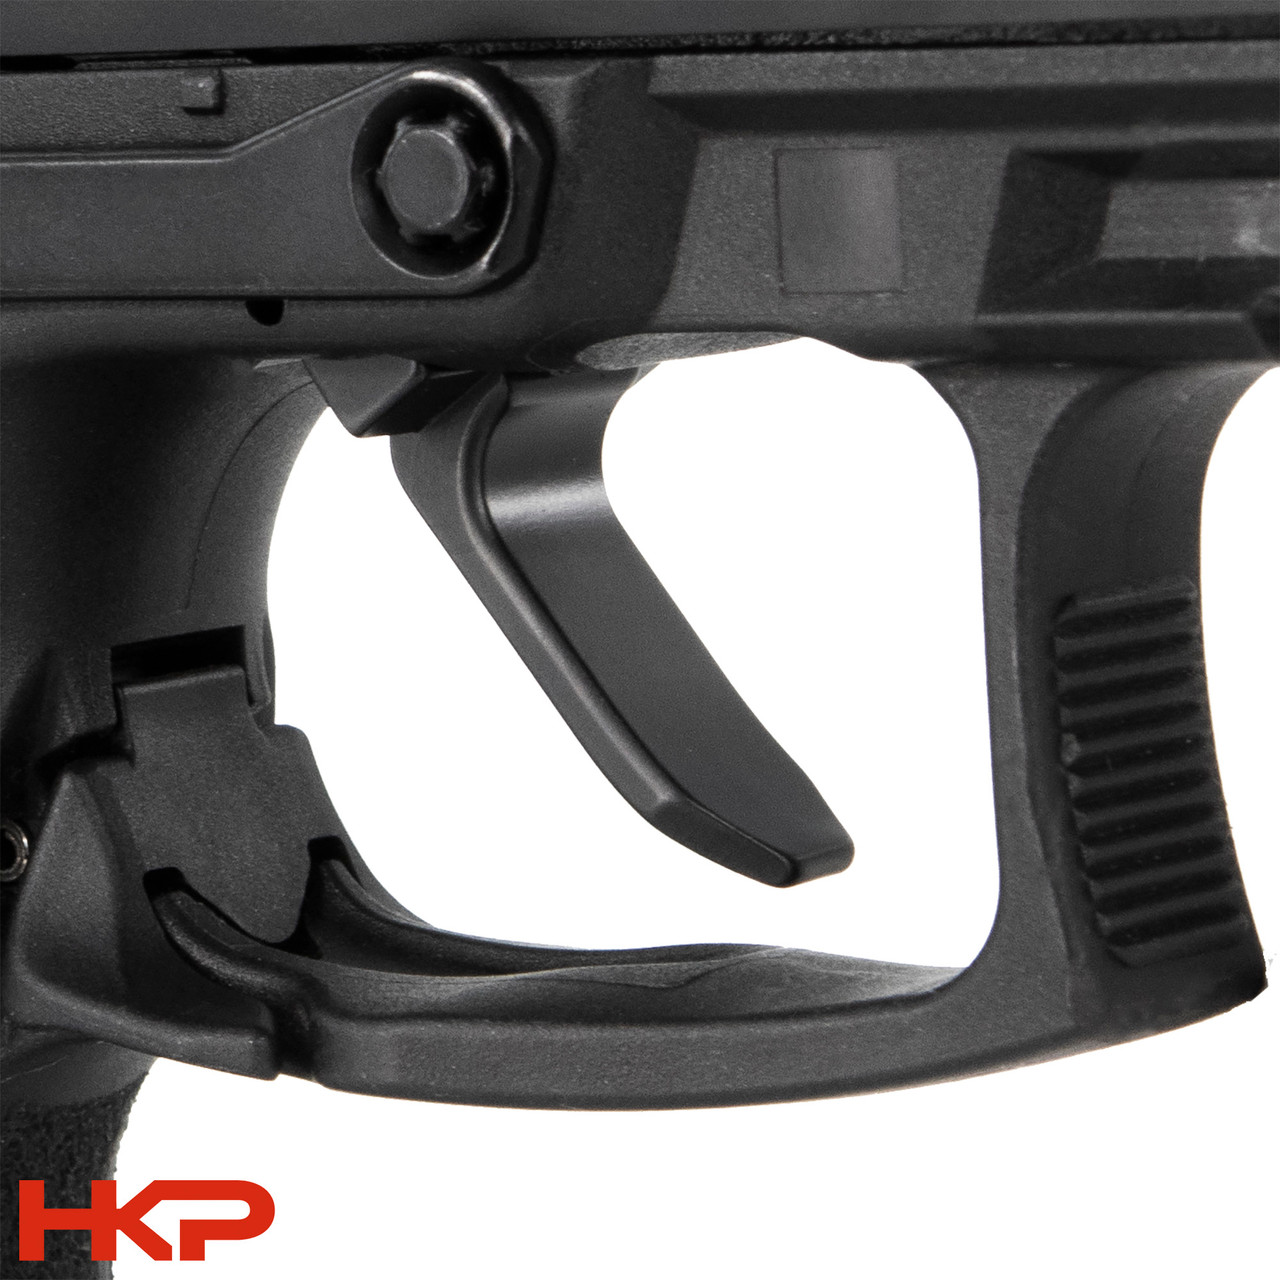 HK USP Straight Trigger - Grayguns